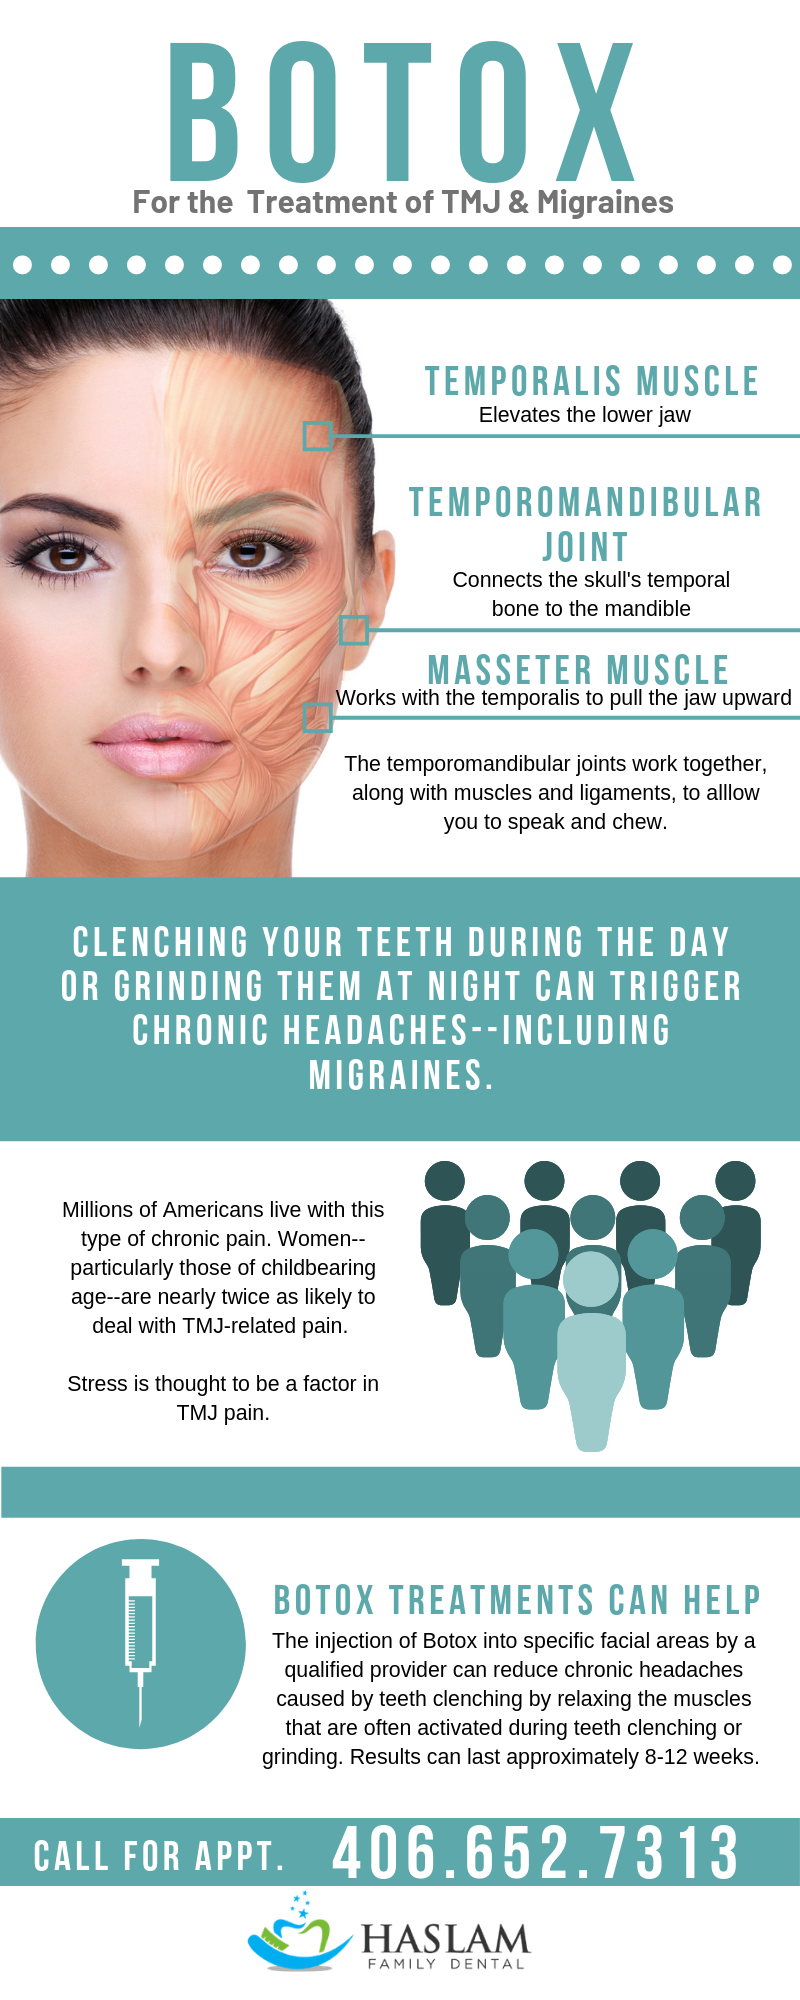 can-botox-help-with-tmj-and-migraines-haslam-dentalhaslam-dental